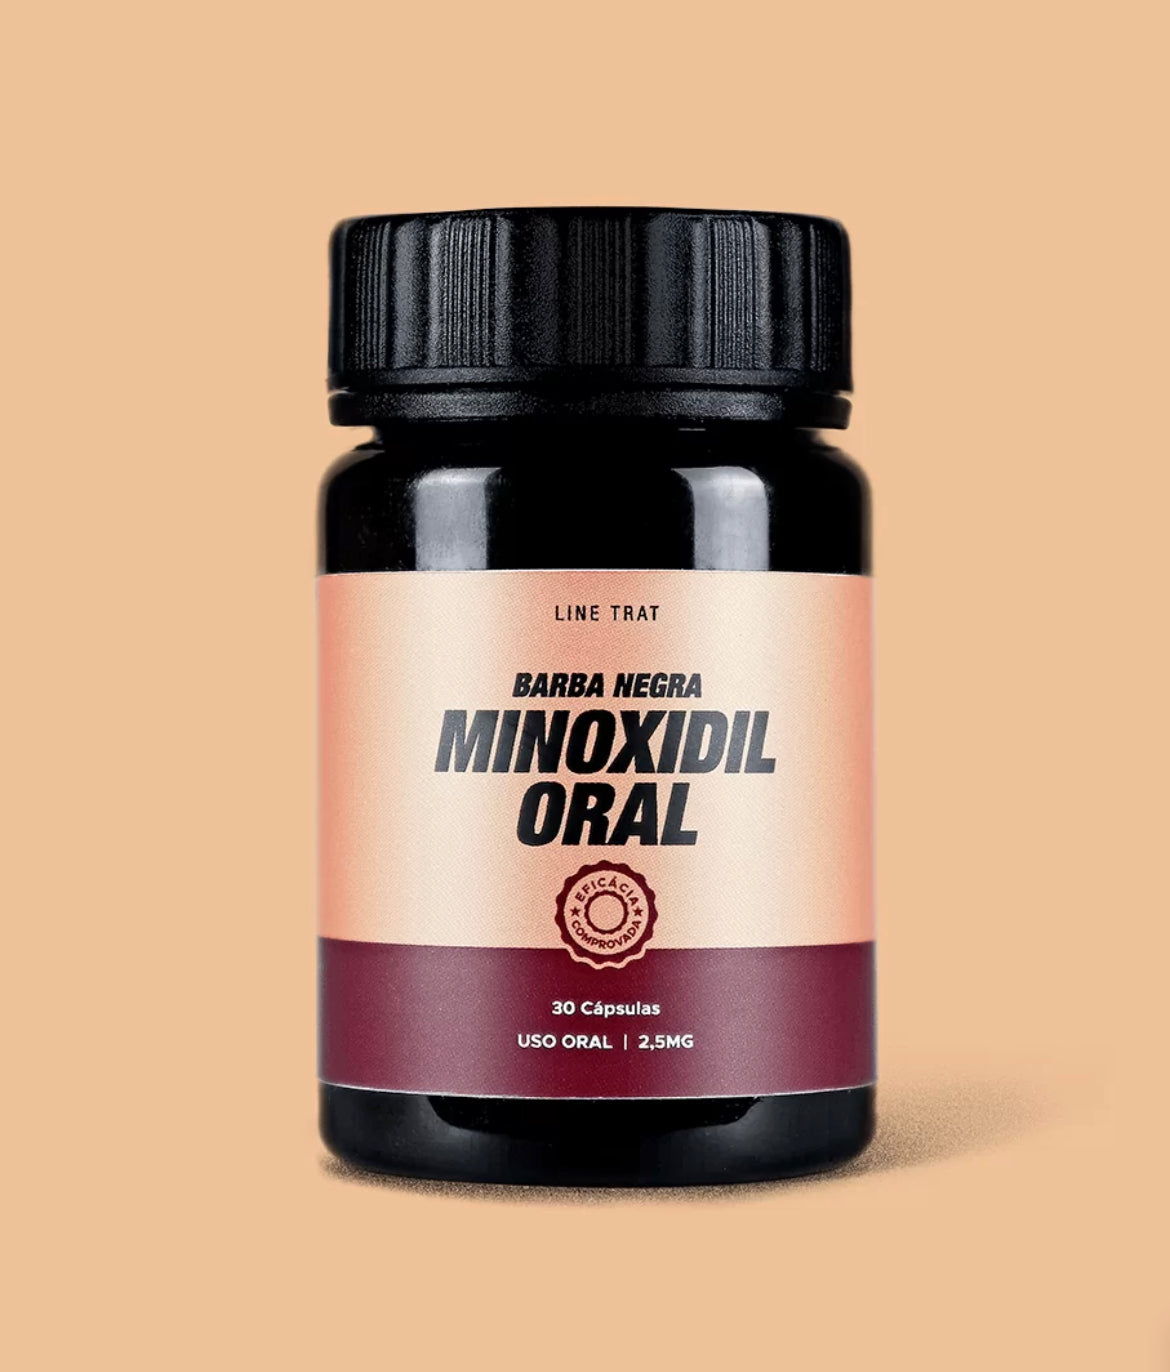 Minoxidil Oral Barbe Noire